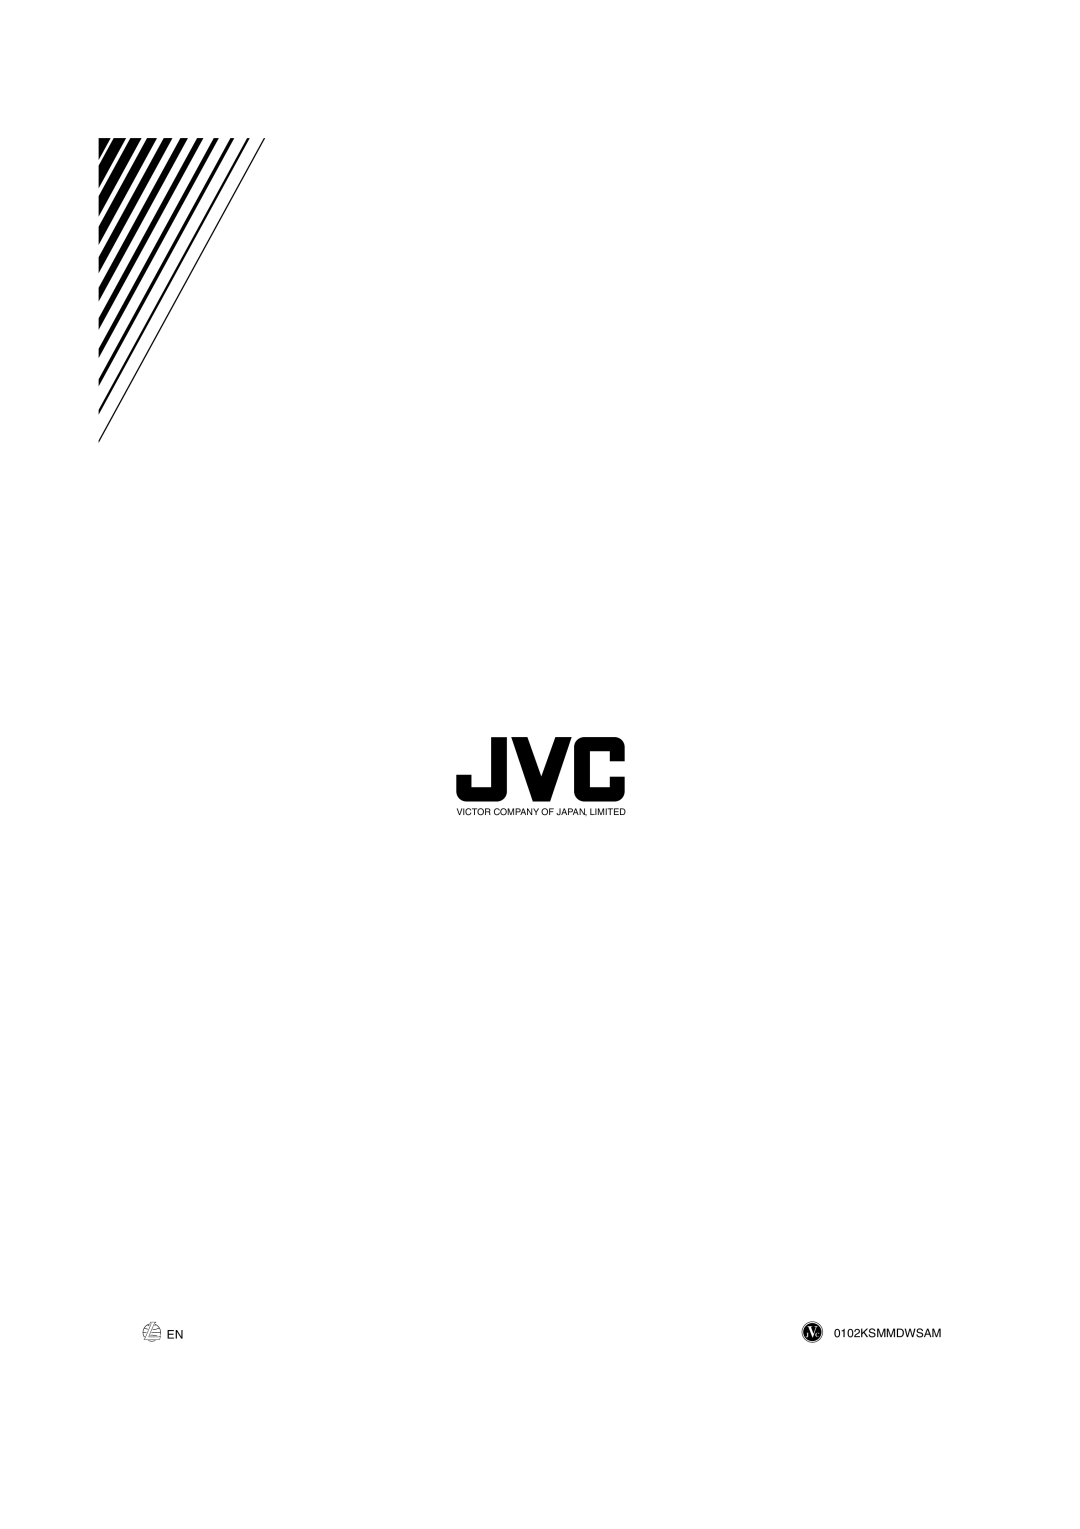 JVC MX-GT700 manual 0102KSMMDWSAM, Victor Company Of Japan, Limited 